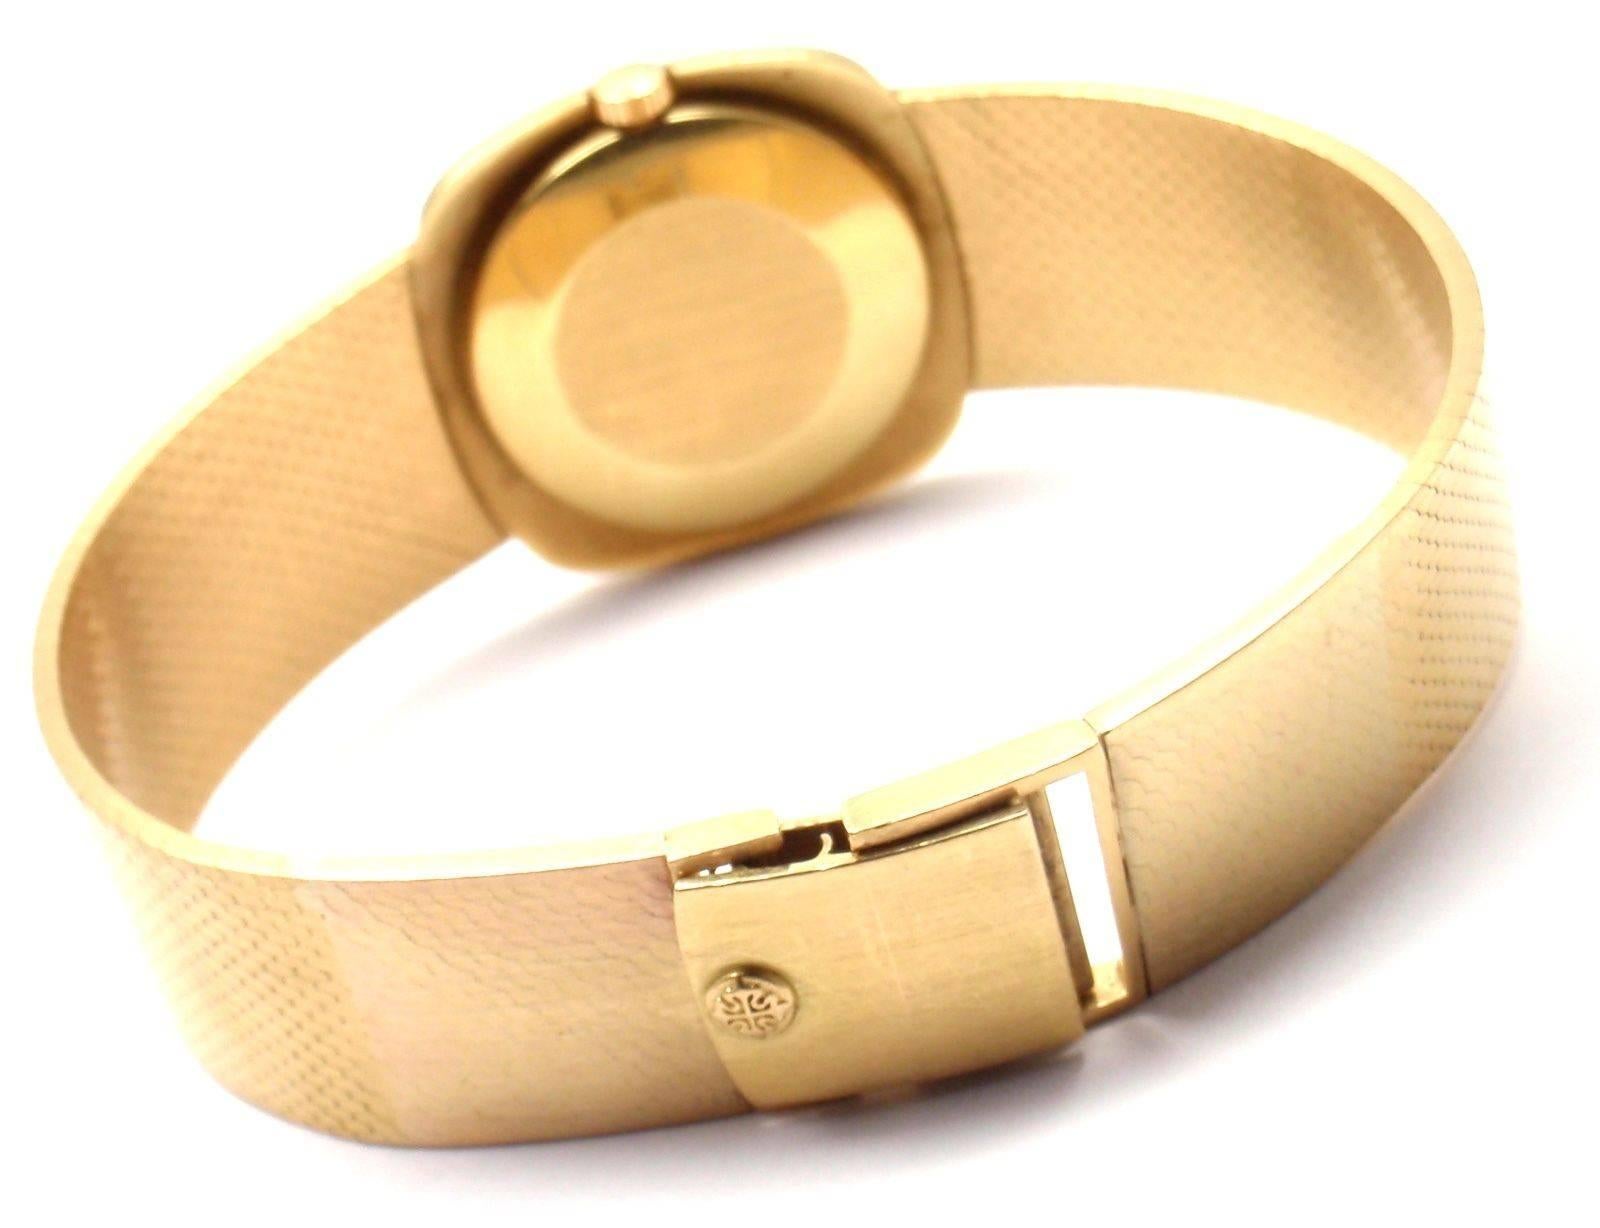 Patek Philippe Yellow Gold Manual Wind Wristwatch with Integral Bracelet Watch 3